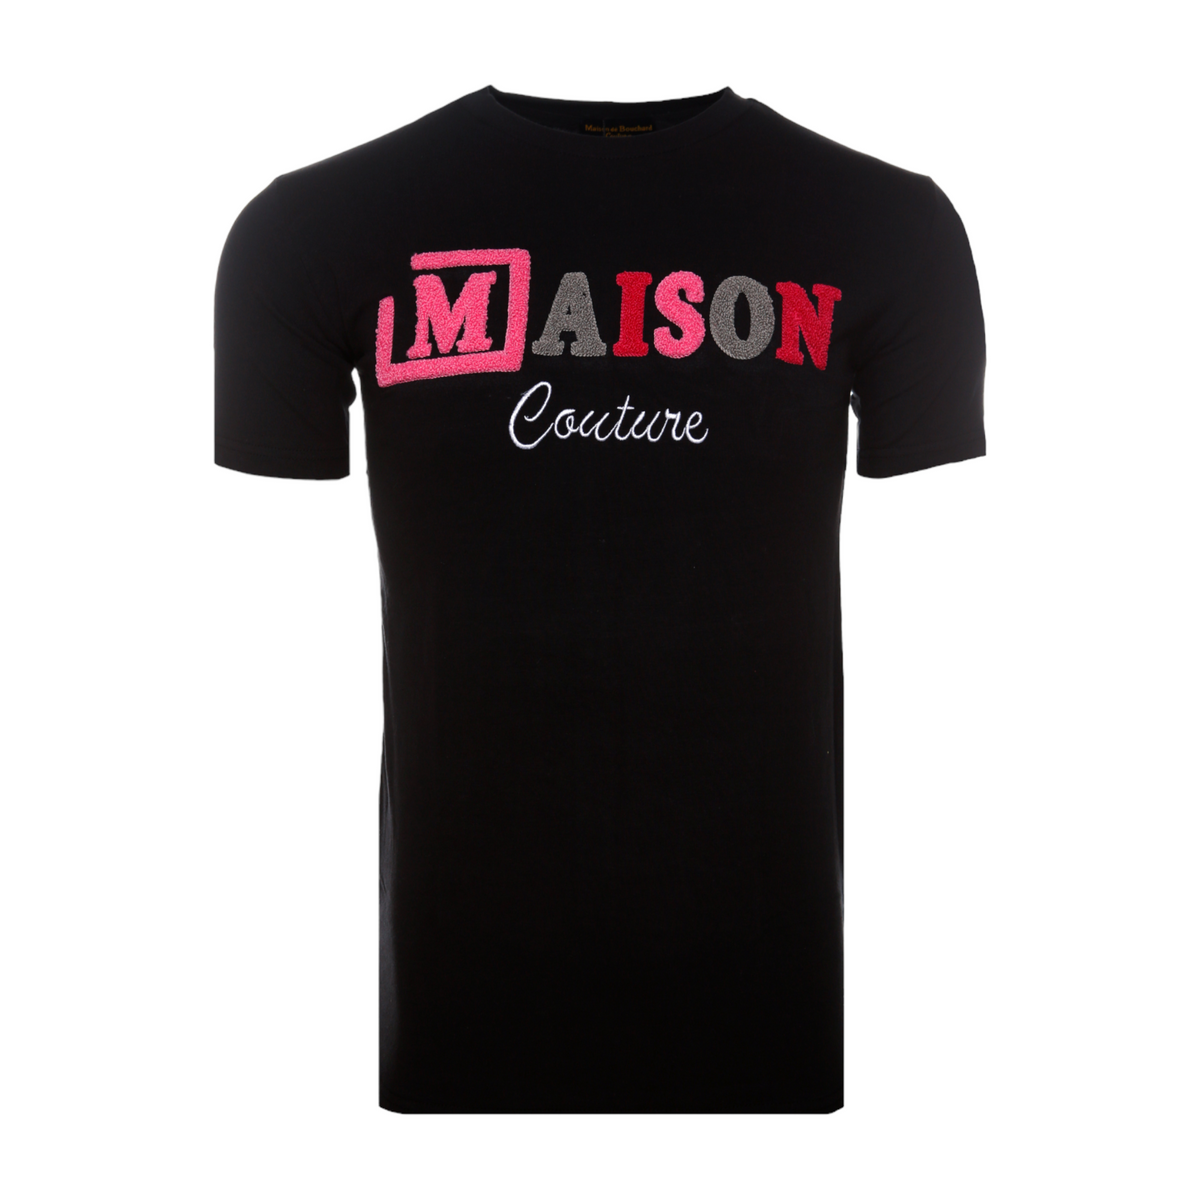 MDB Couture Men's Summer Chenille T-Shirt - Black w/ Vibrant Colors